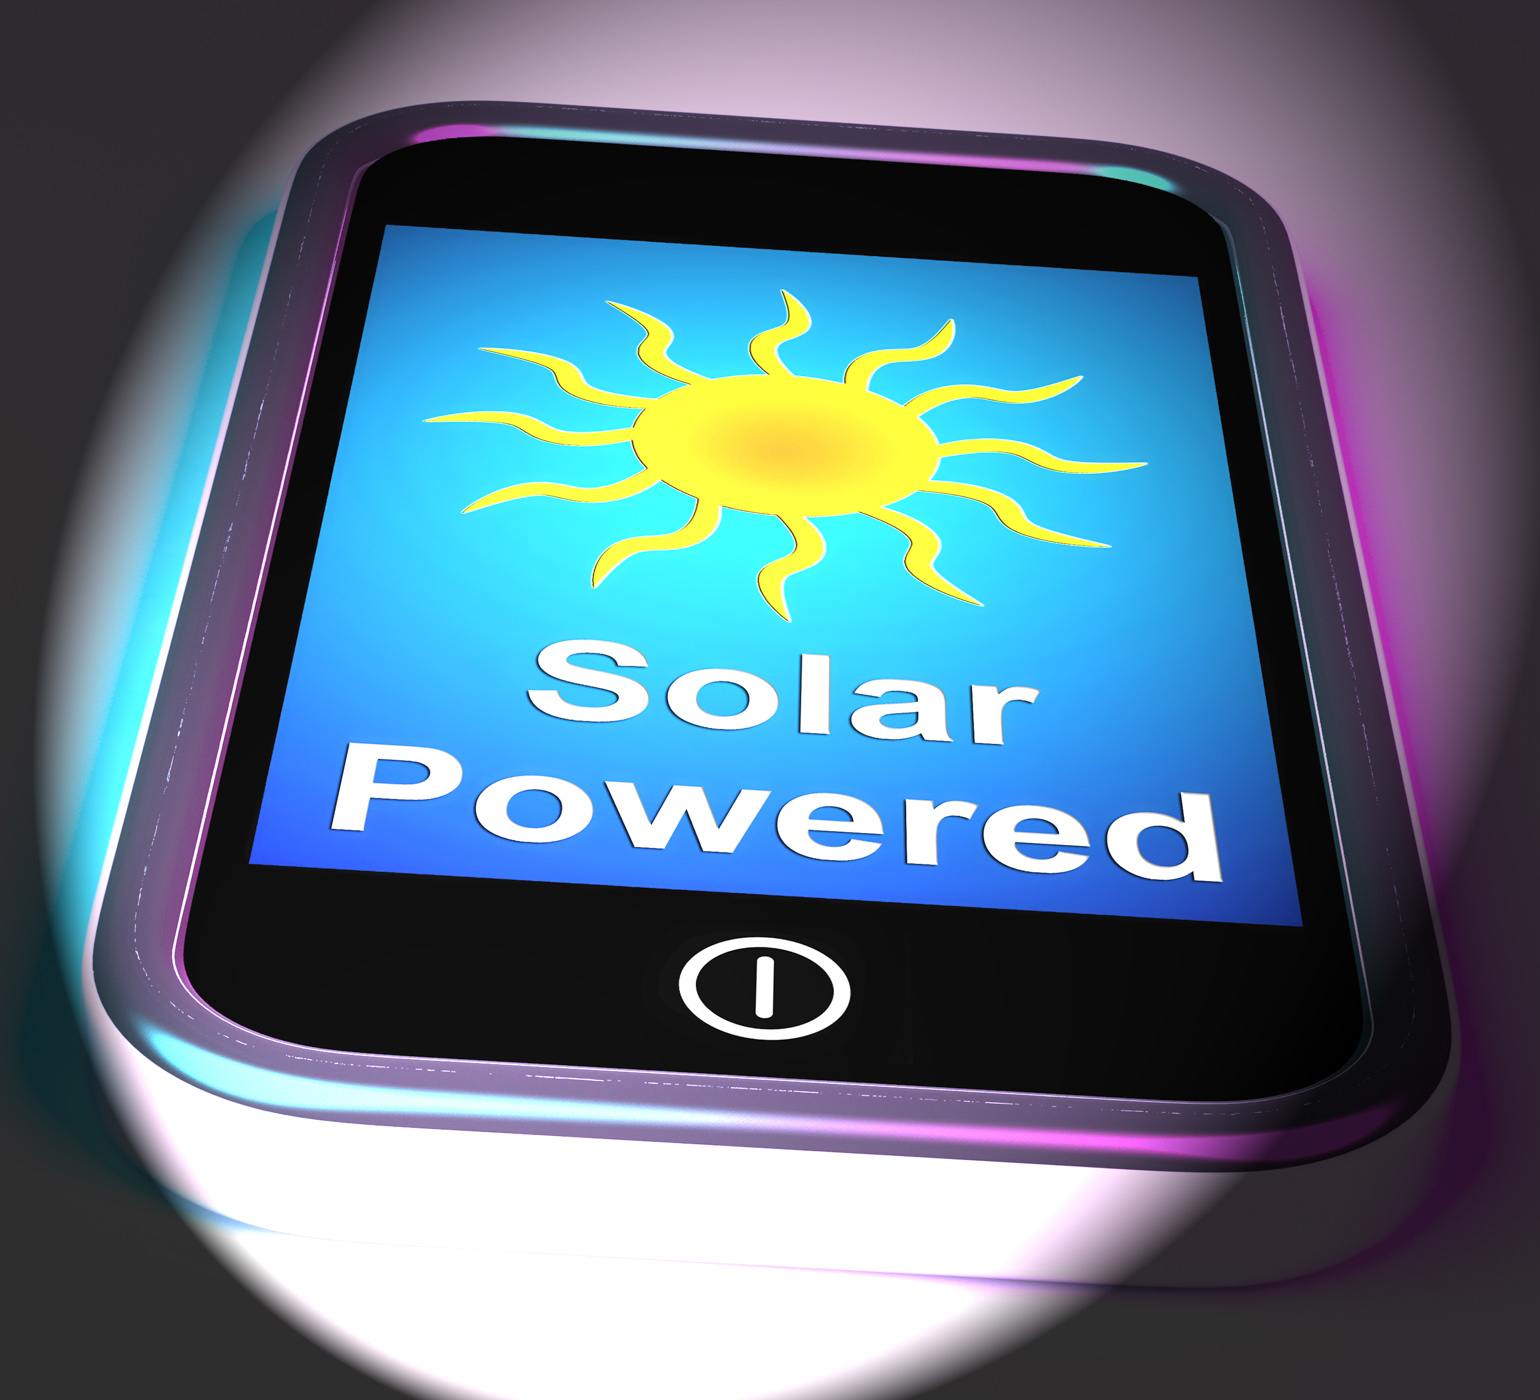 Solar powered on phone displays alternative energy and sunlight photo